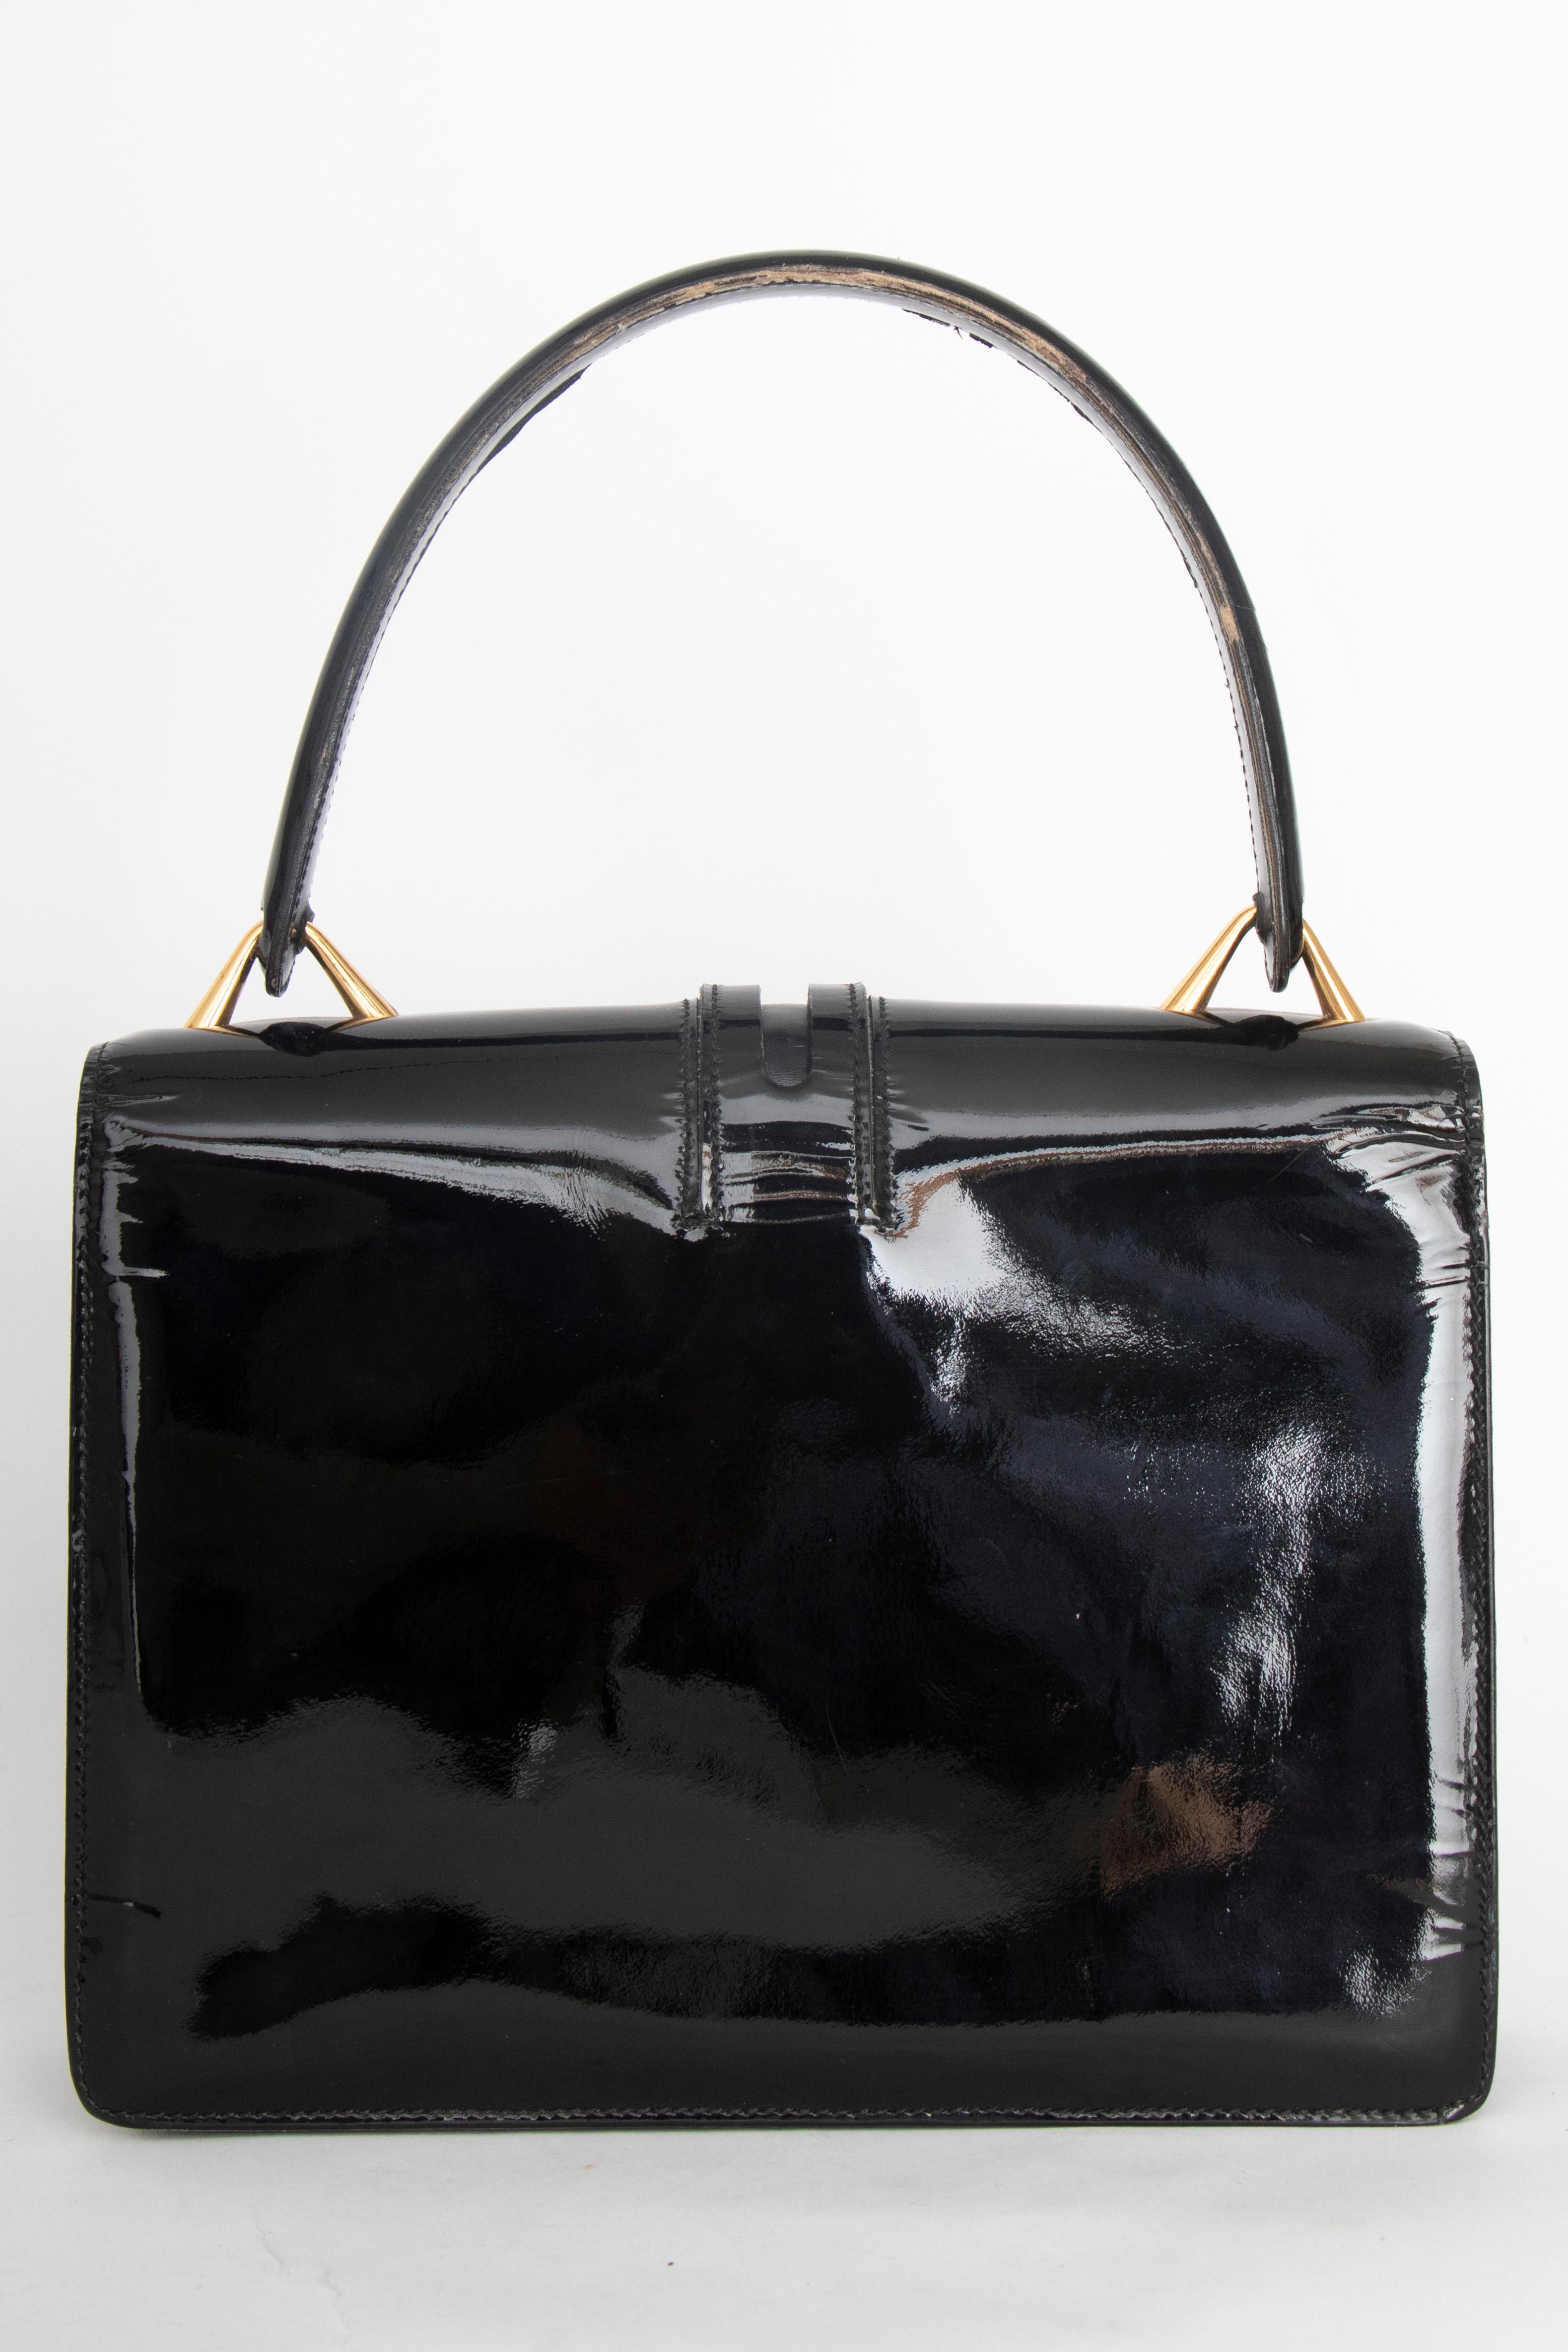 Gucci | Bags | Authentic Vintage Gucci Patent Leather Bag | Poshmark